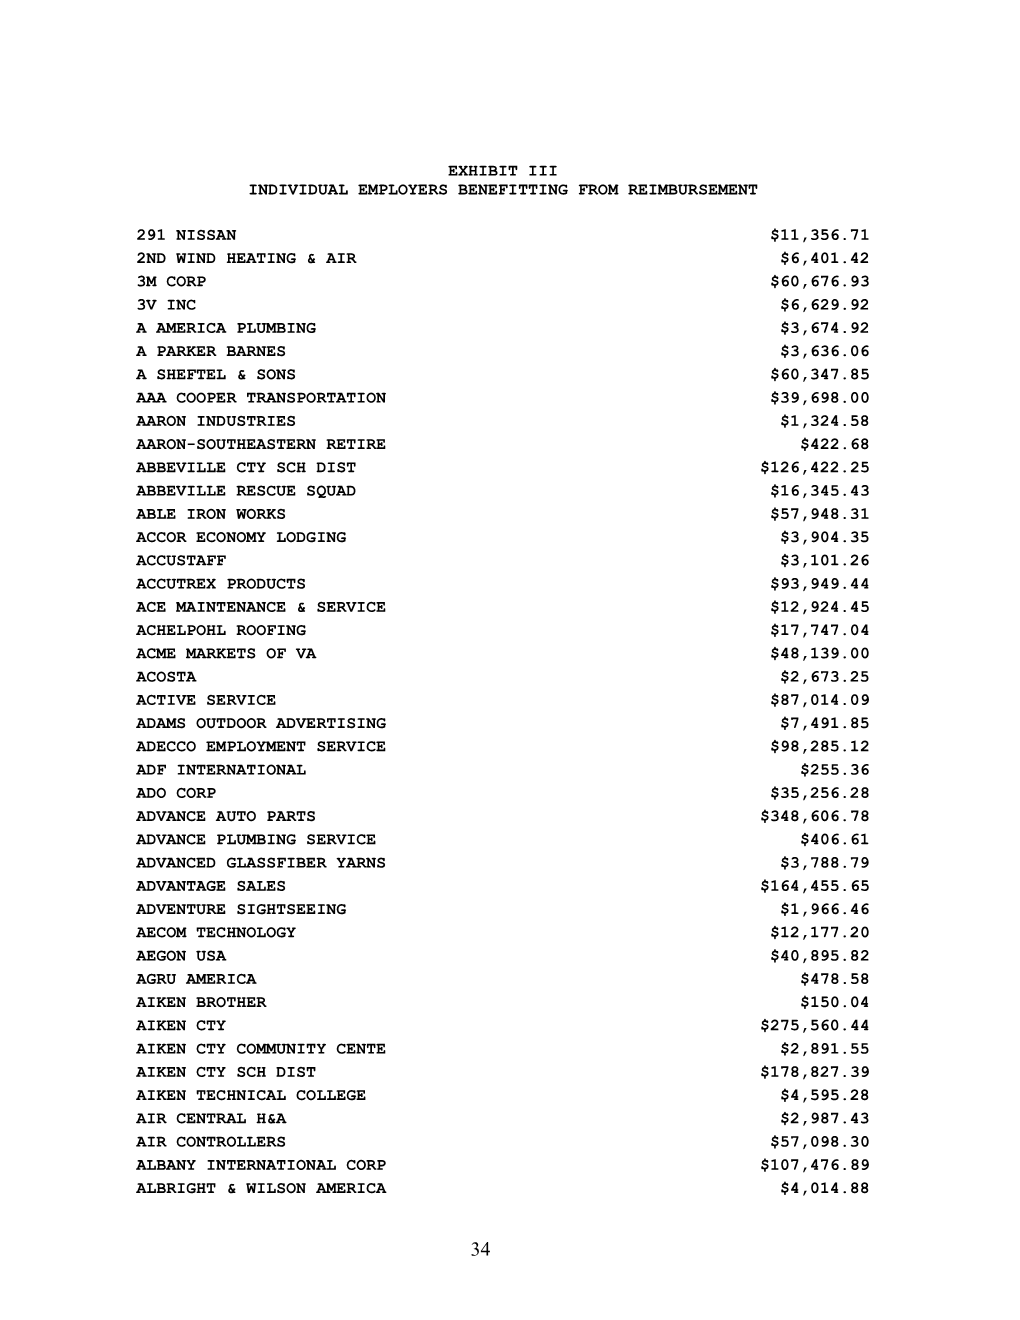 Exhibit Iii Individual Employers Benefitting from Reimbursement 291 Nissan $11,356.71 2Nd Wind Heating & Air $6,401.4